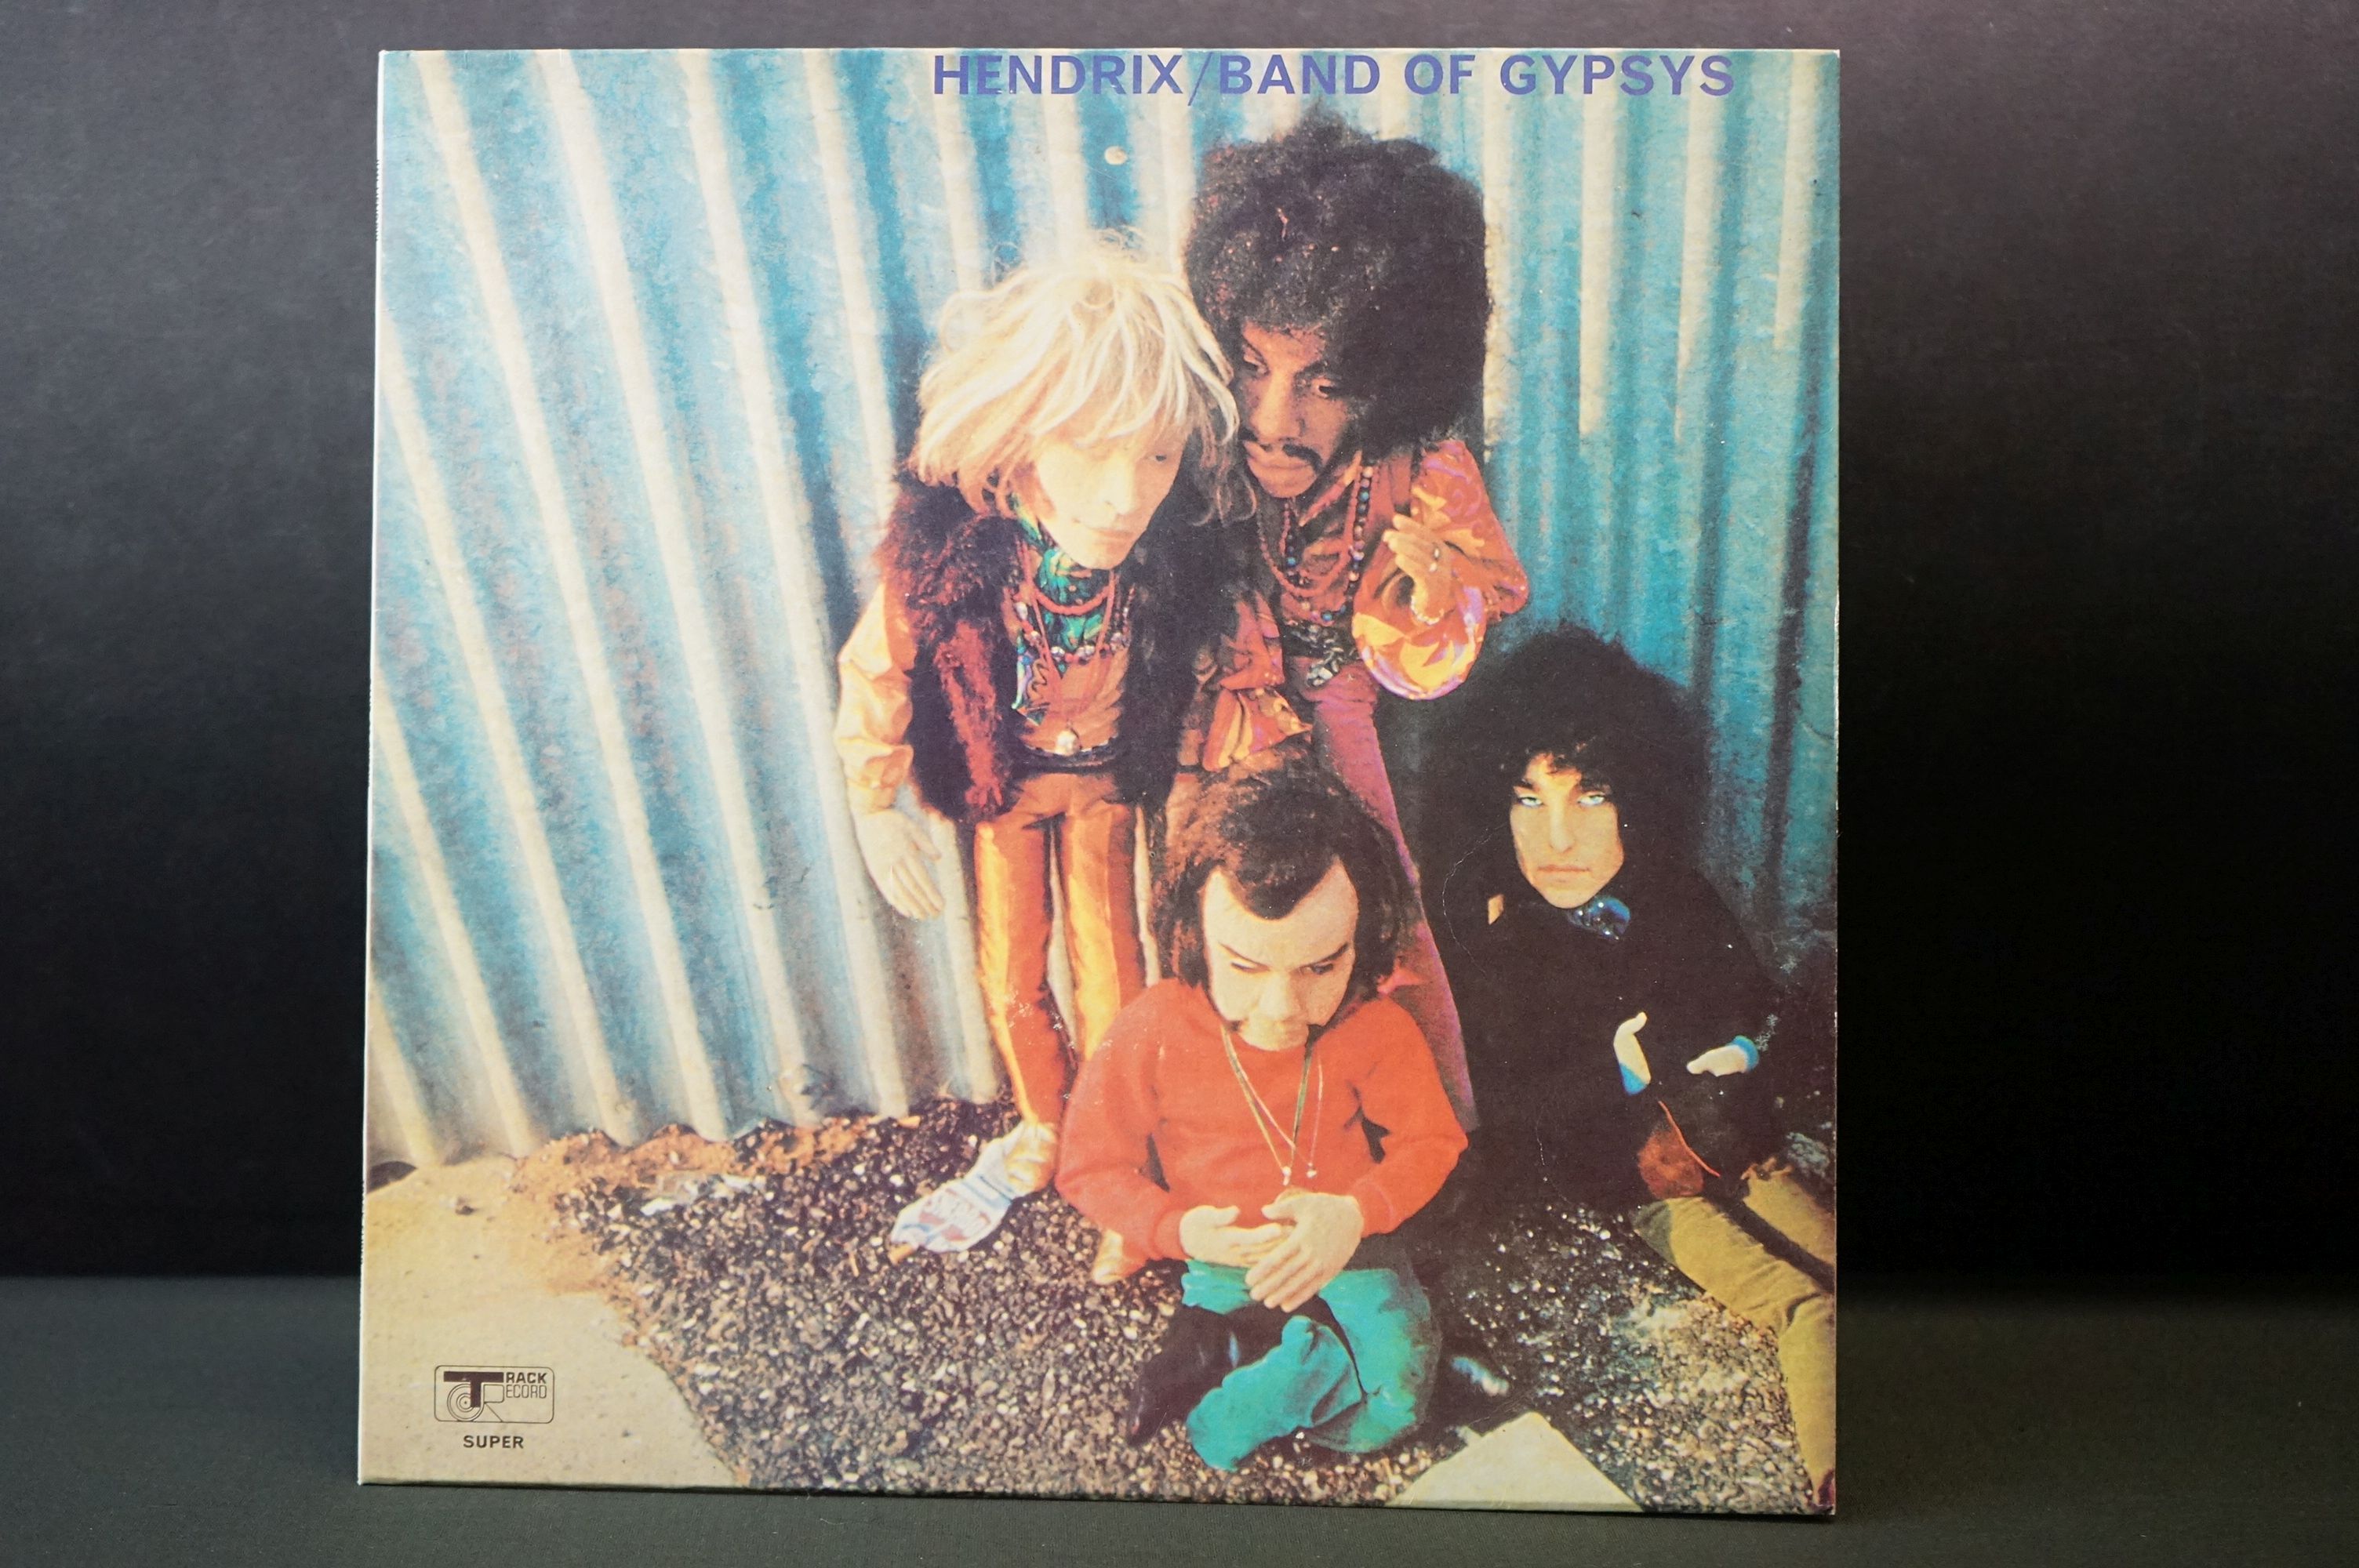 Vinyl - Jimi Hendrix Band Of Gypsys on Track 2406 002 'puppet' sleeve. Vg+